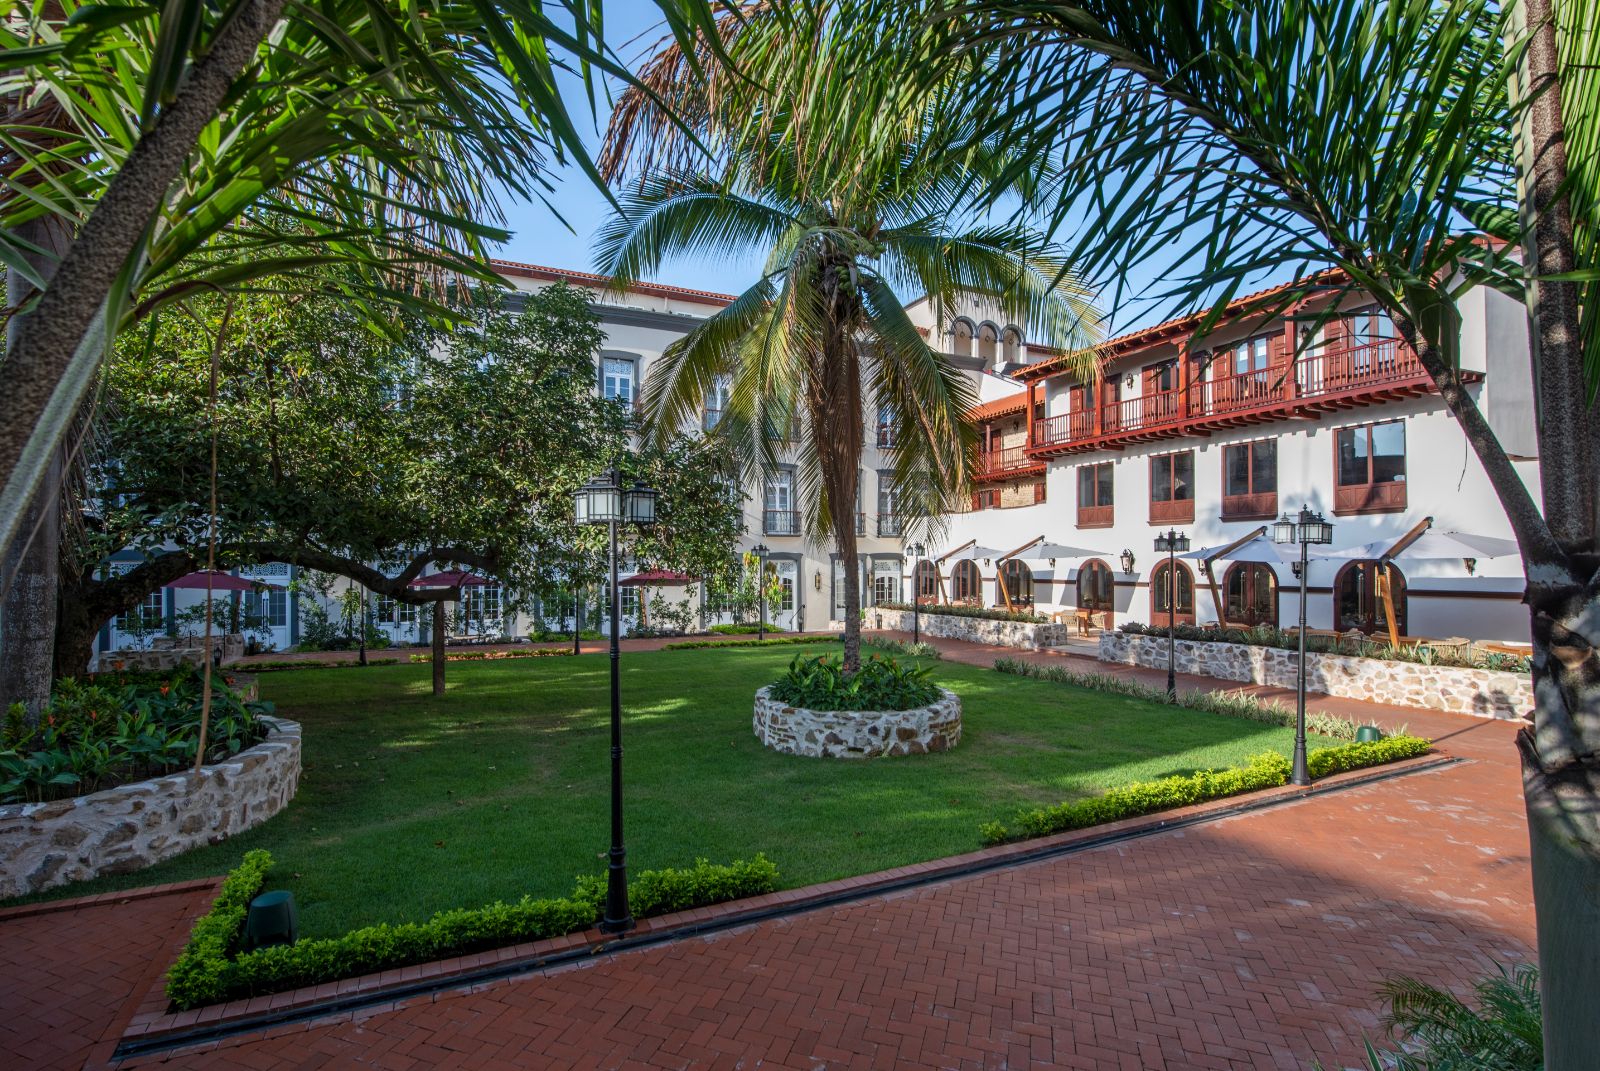 Courtyard at Hyatt's Hotel La Compania in Panama City